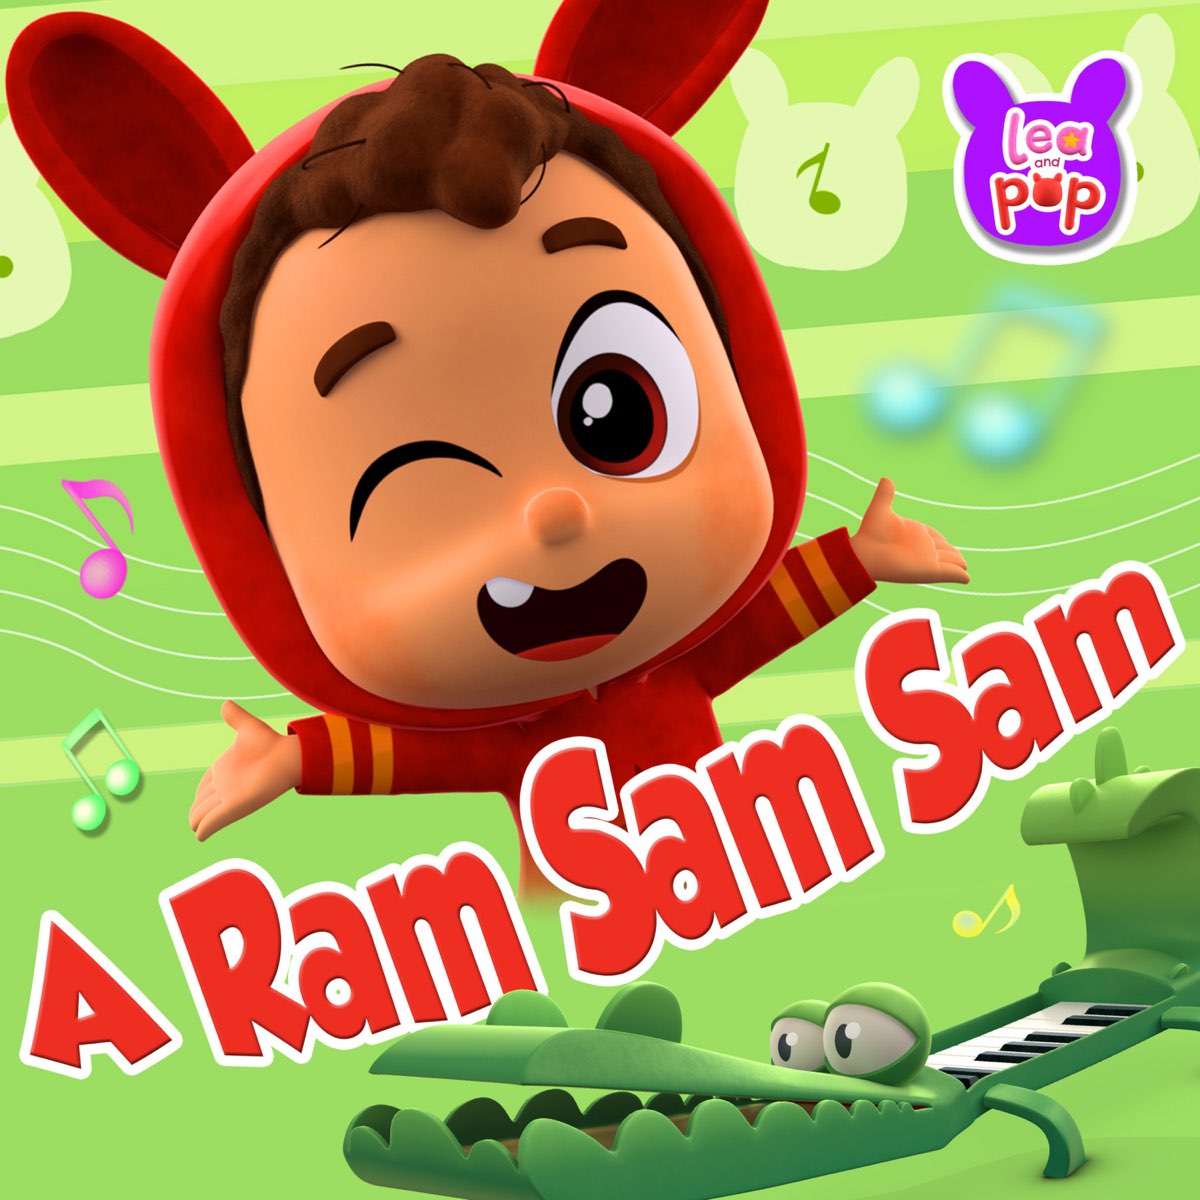 A Ram Sam Sam by Lea and Pop on Apple Music